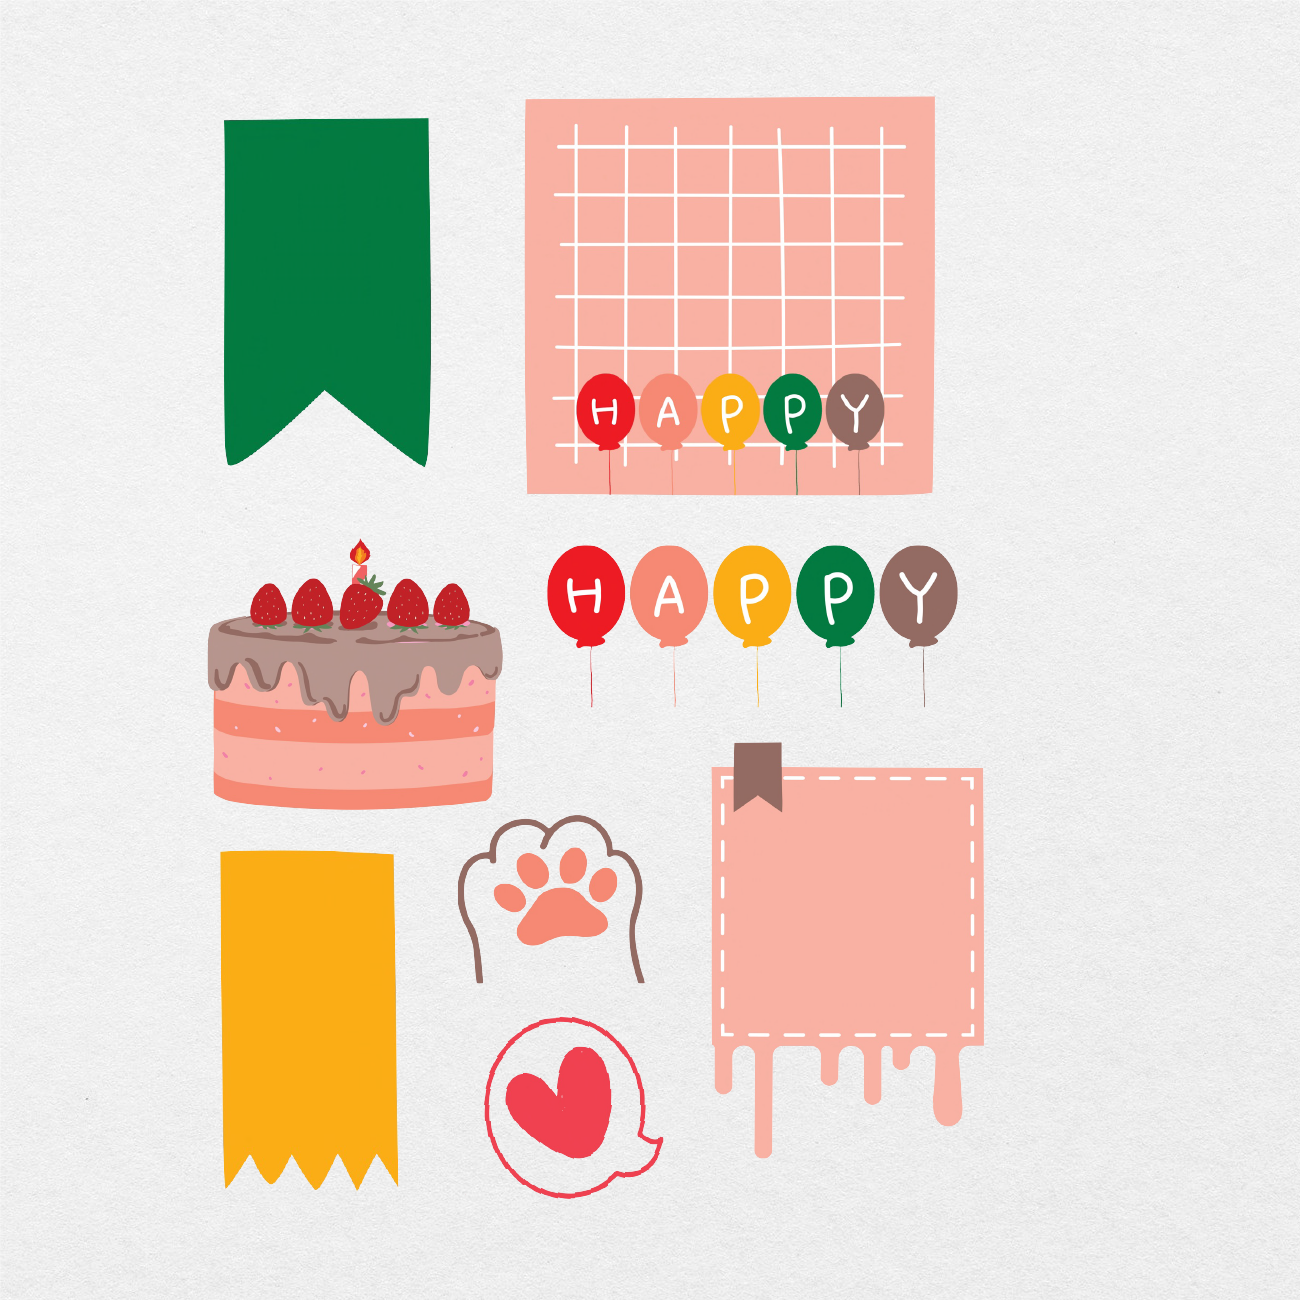 100 Digital Colorful Bear Planner Sticker Bundle - Stationery Pal